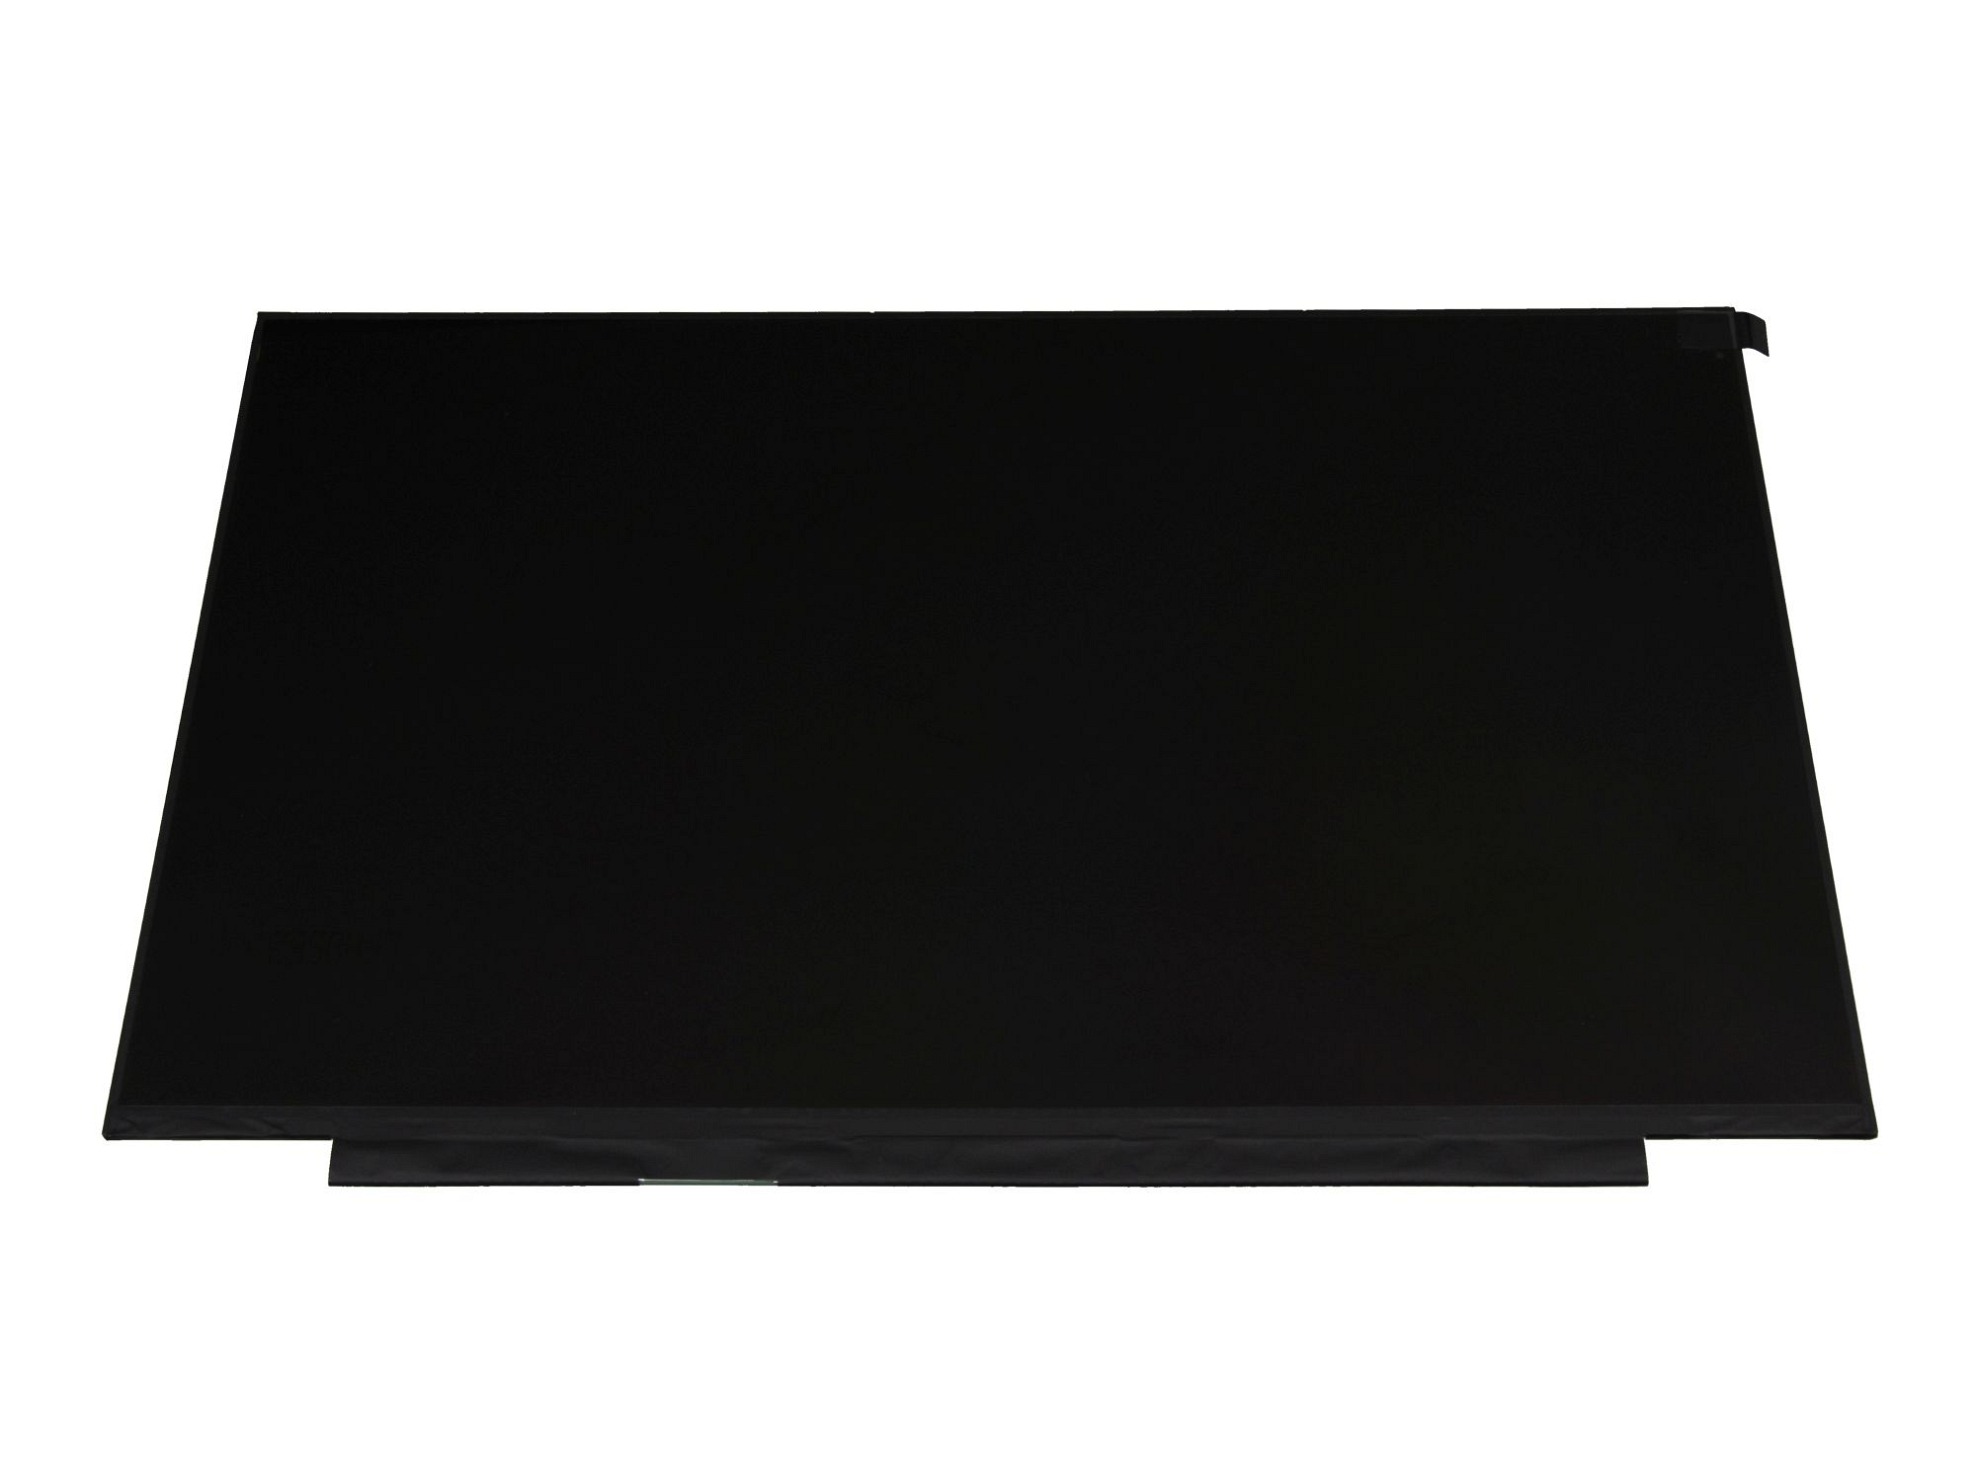 LG LP173WFG-SPB3 144Hz IPS Display (1920x1080) matt slimline